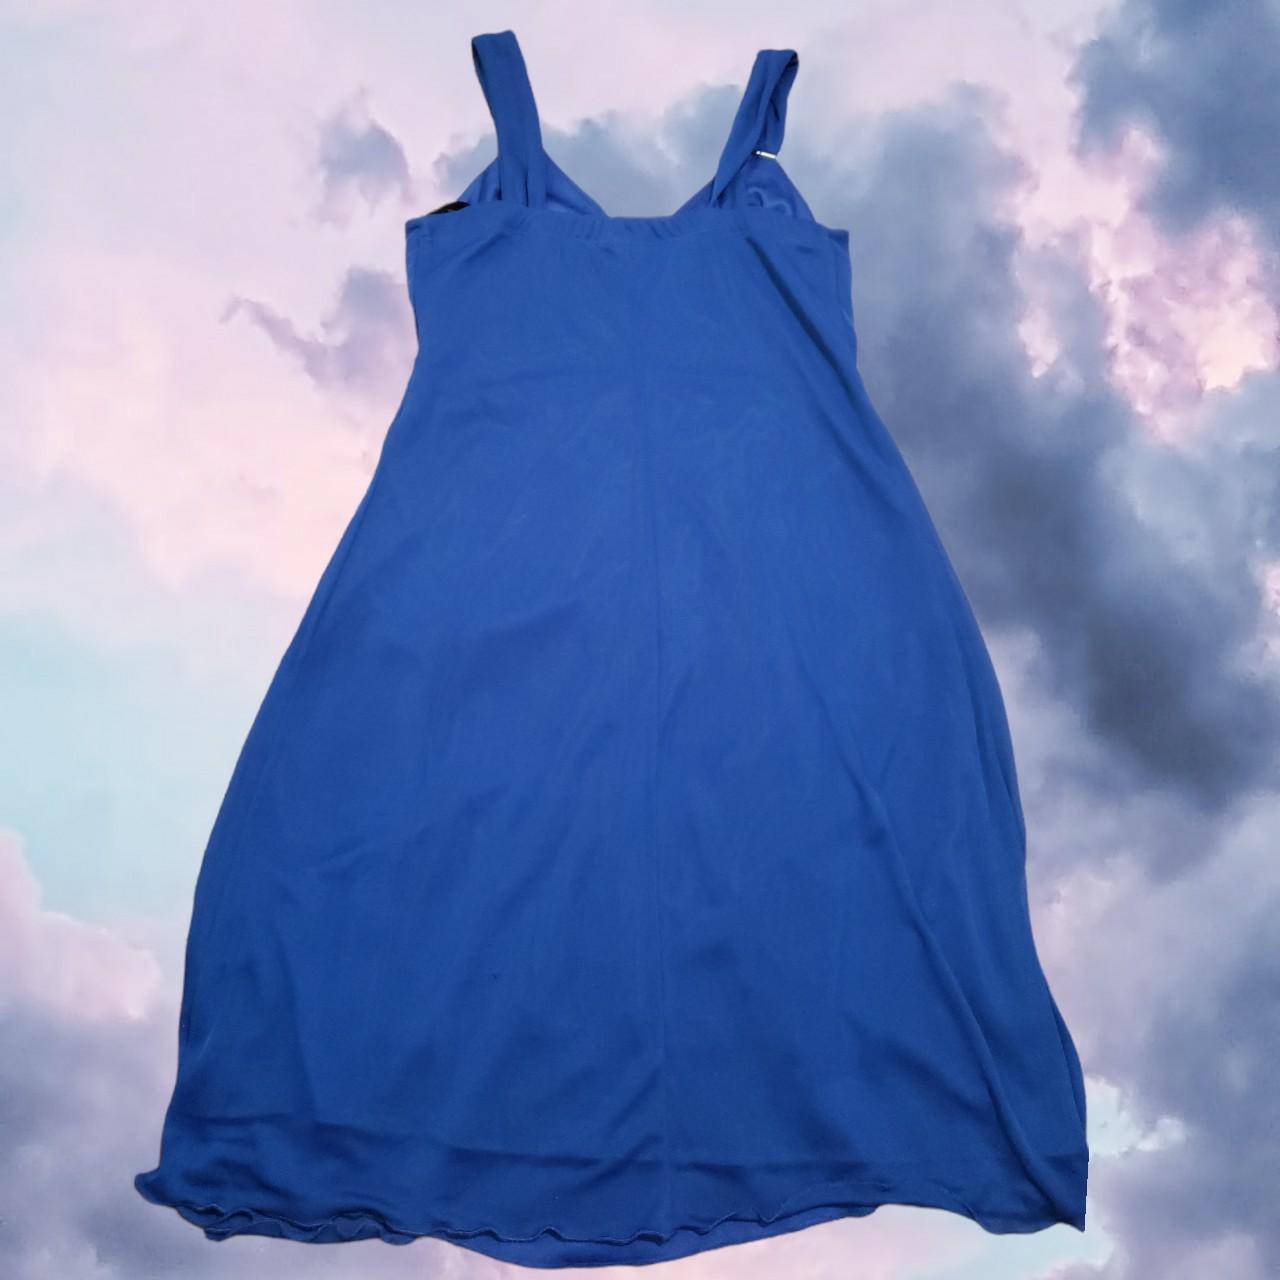 Product Image 2 - Enfocuse studio simple blue dress